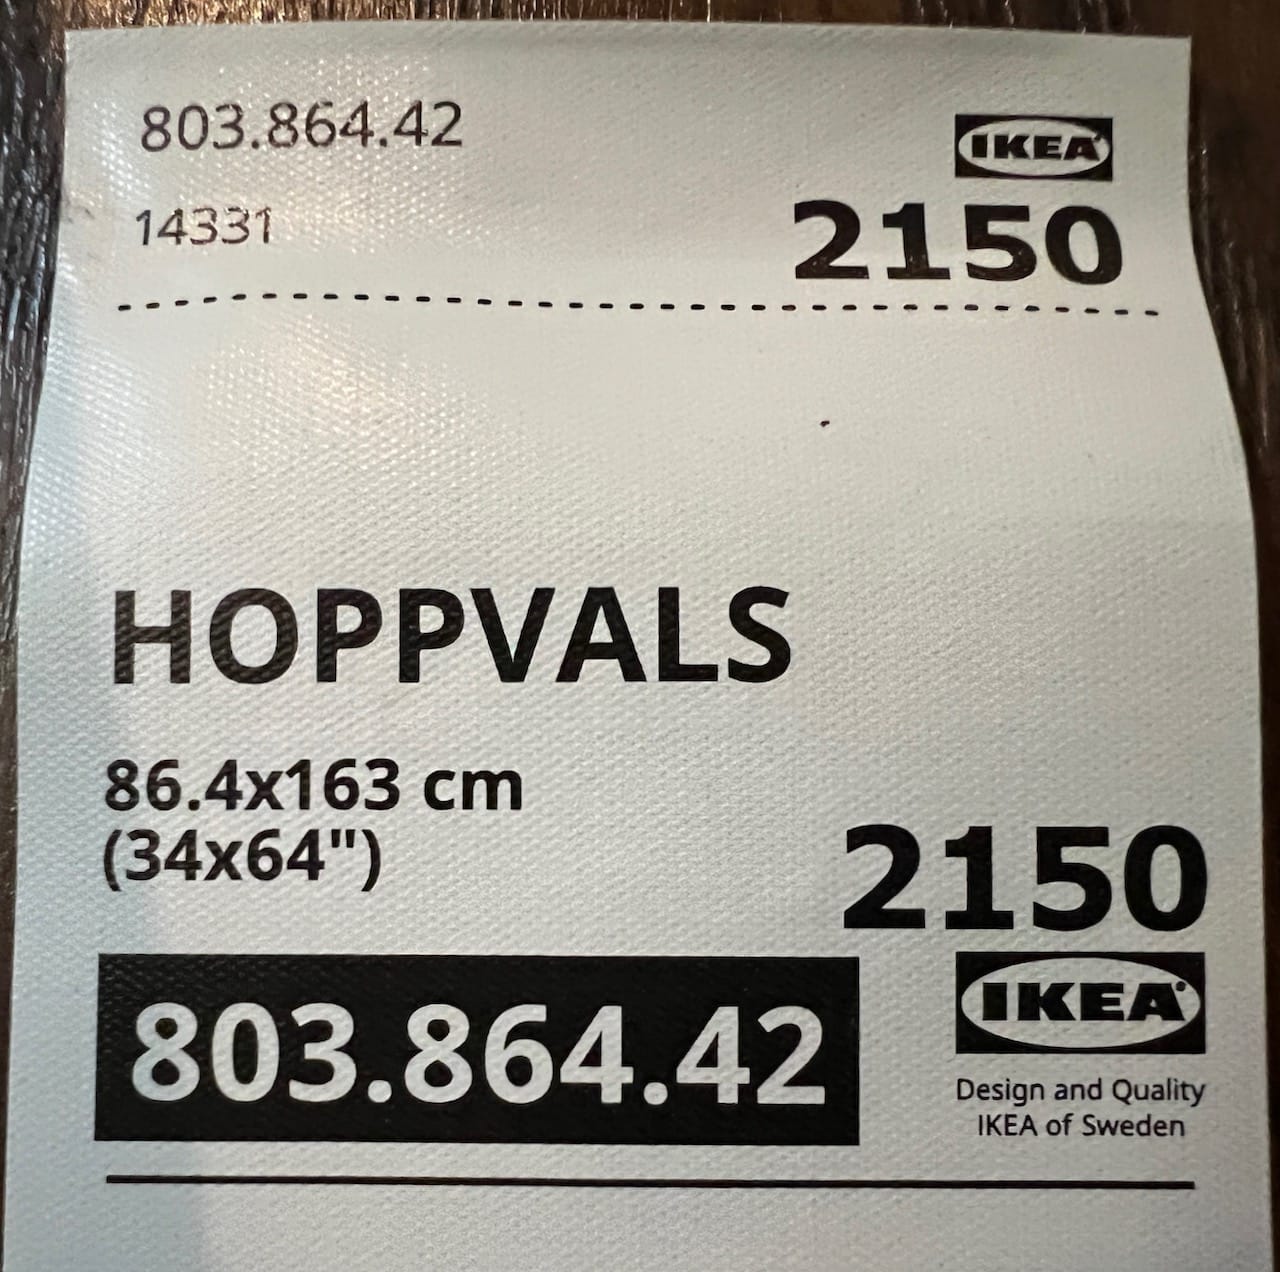 IKEA HOPPVALS Room Darkening Cellular Shades Review